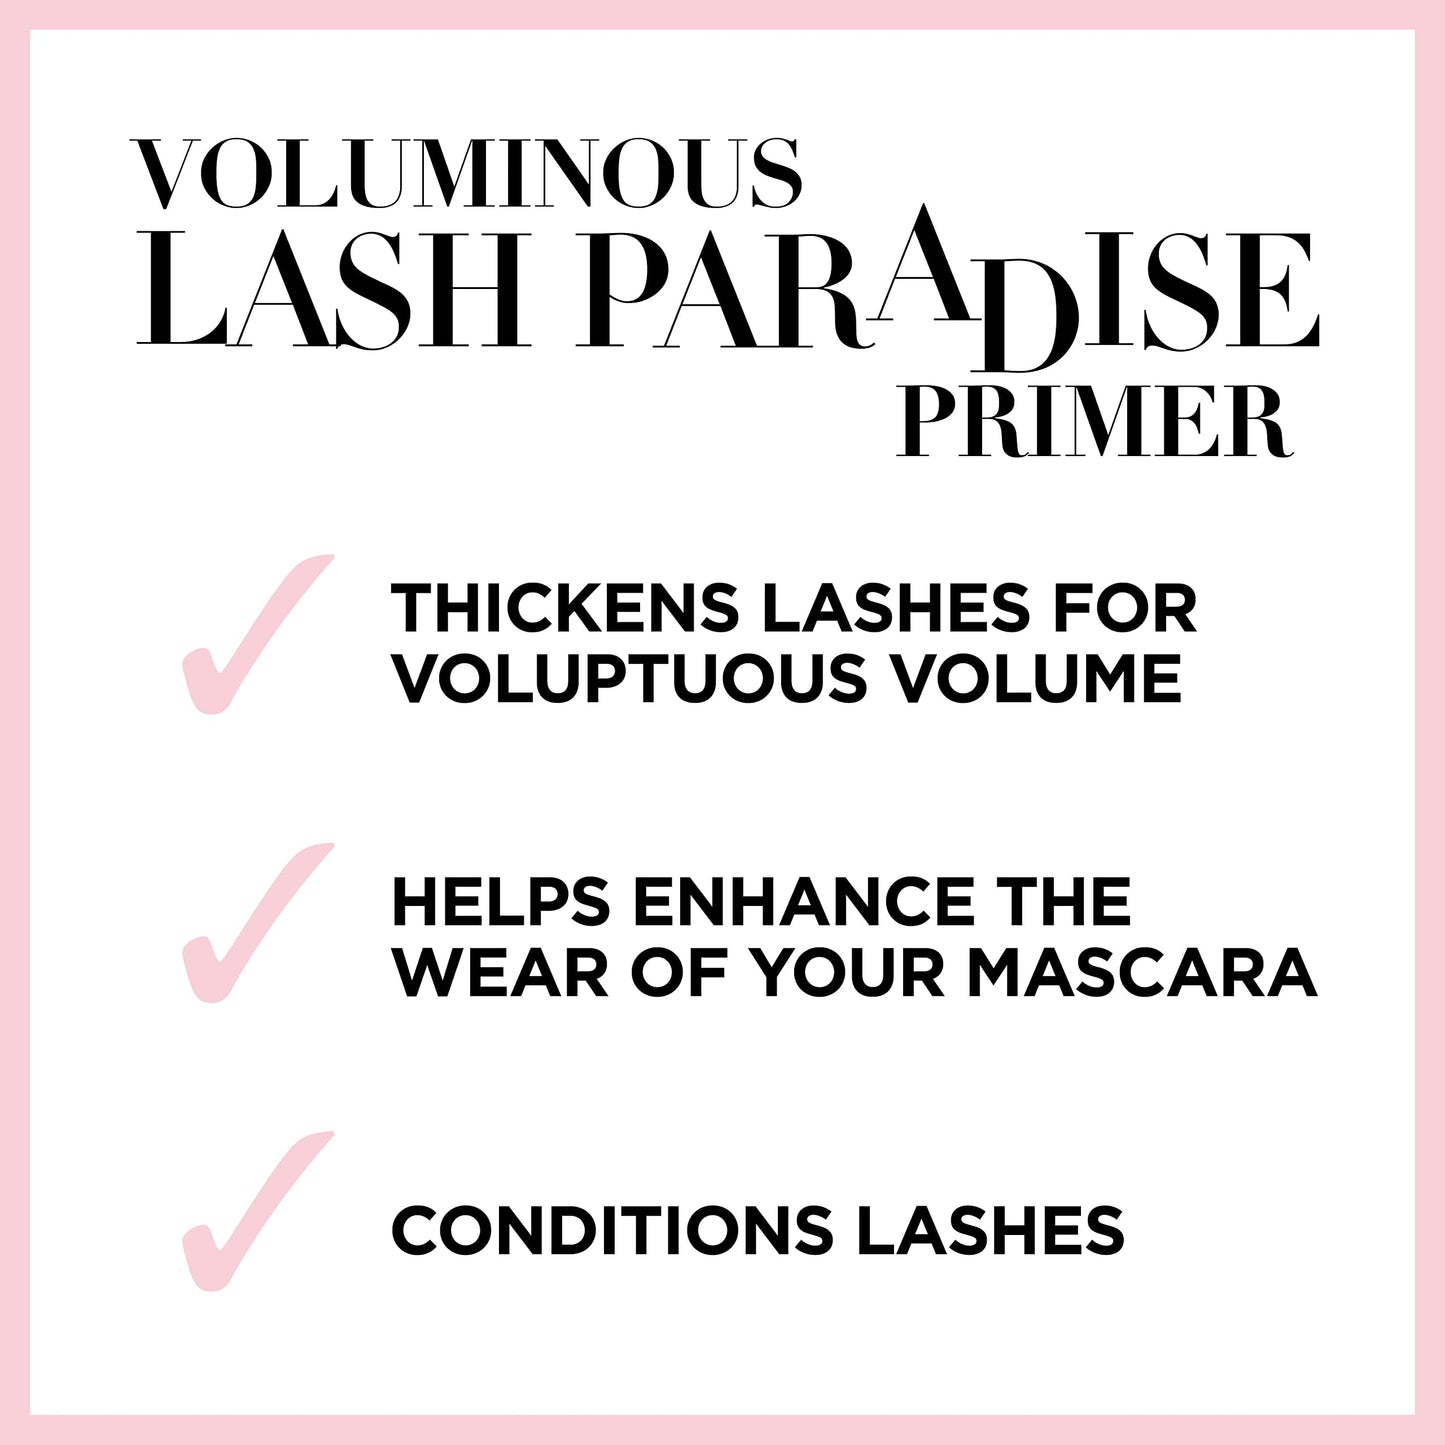 L'Oreal Paris Cosmetics Voluminous Lash Paradise Mascara Primer Base, Millennial Pink, 0.27 Fluid Ounce, Packaging May Vary